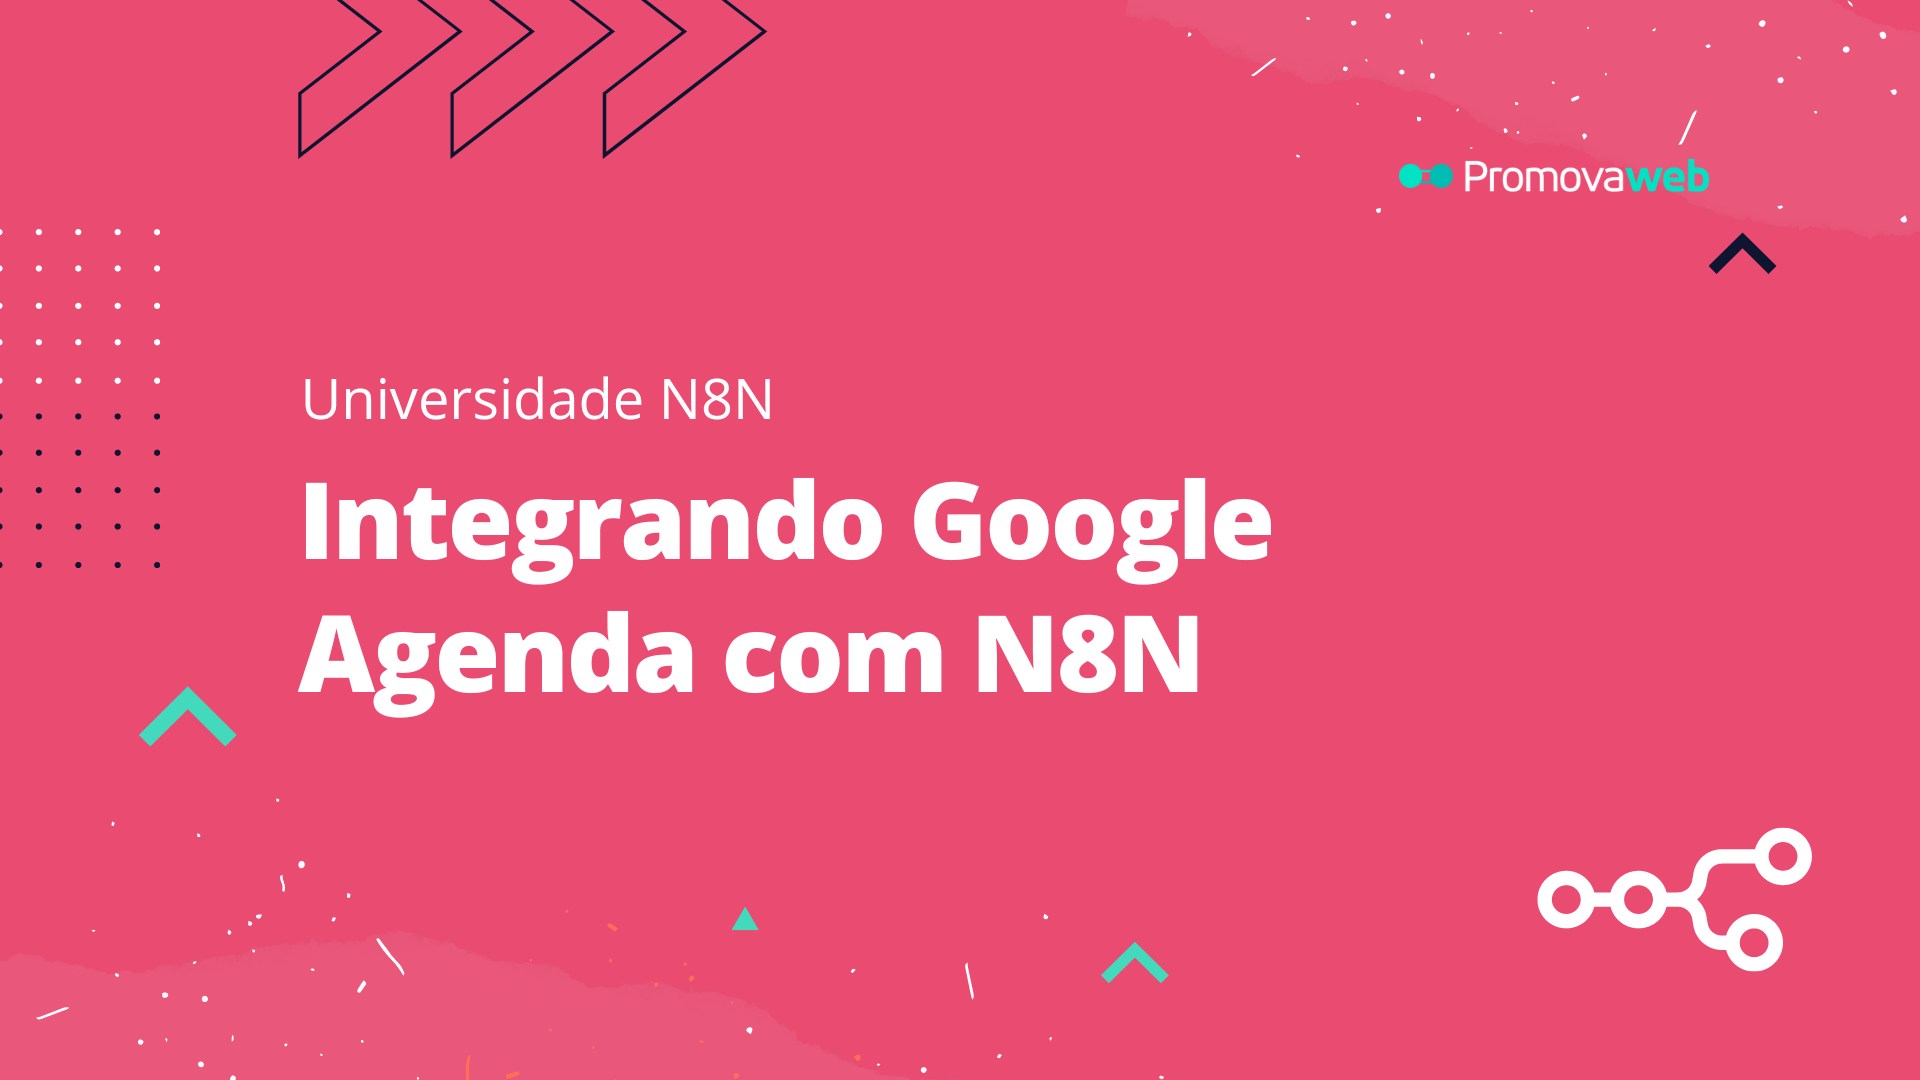 Integrando Google Agenda com N8N